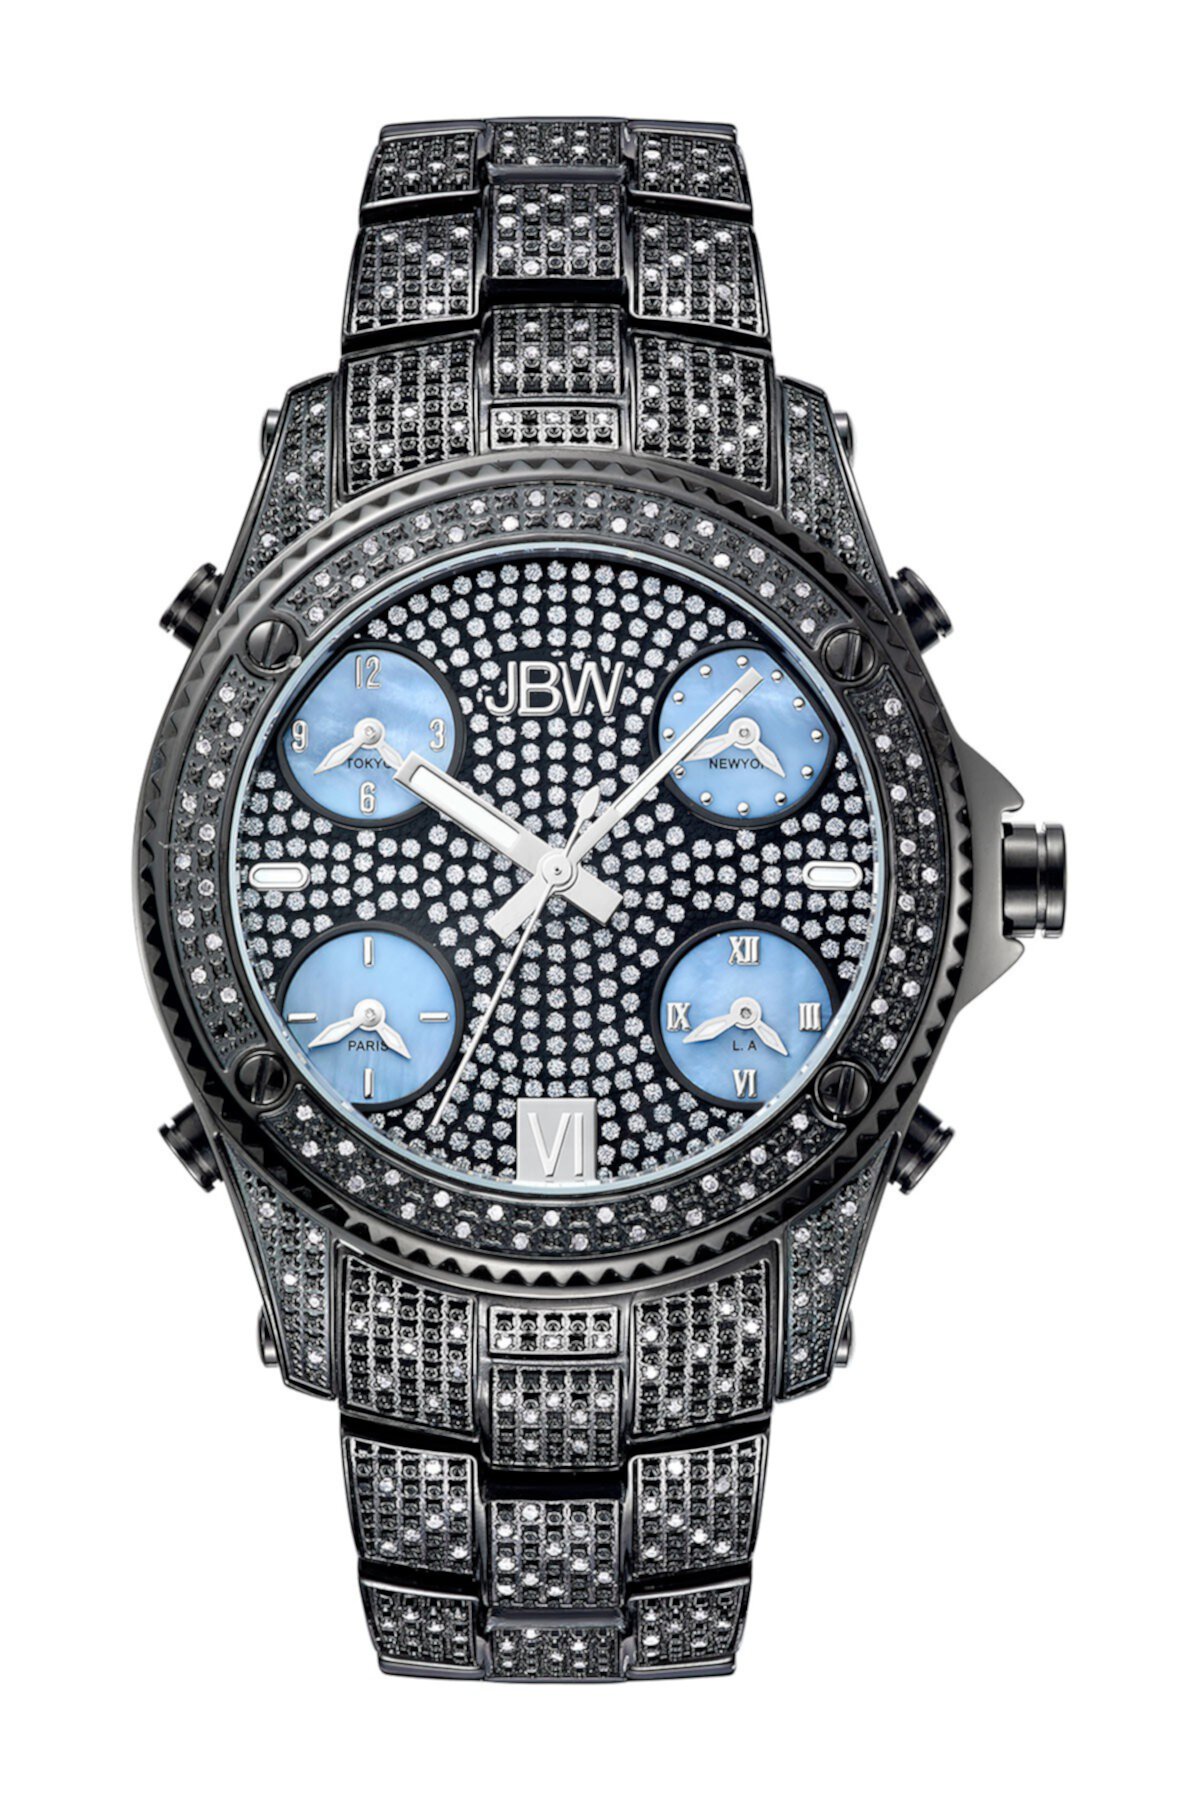 Мужские часы с бриллиантами Jet Setter, 50мм - 2.34 ctw JBW